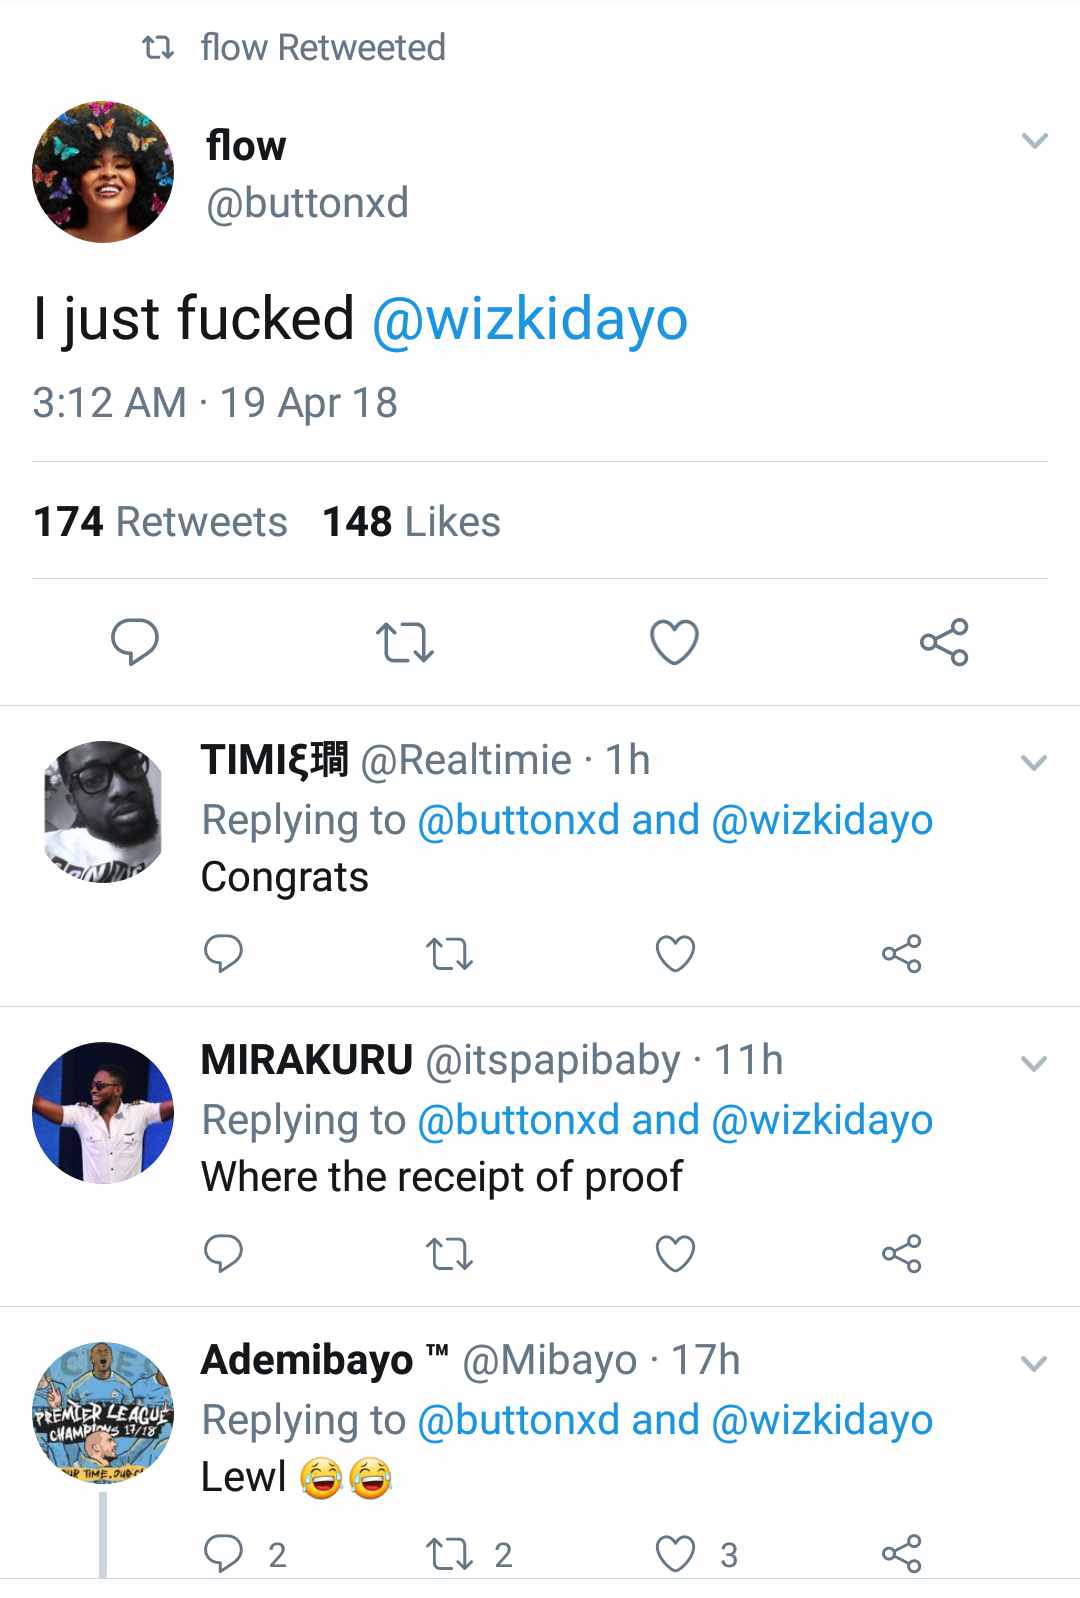 I just f**ked Wizkid - London based Nigerian lady announces on Twitter